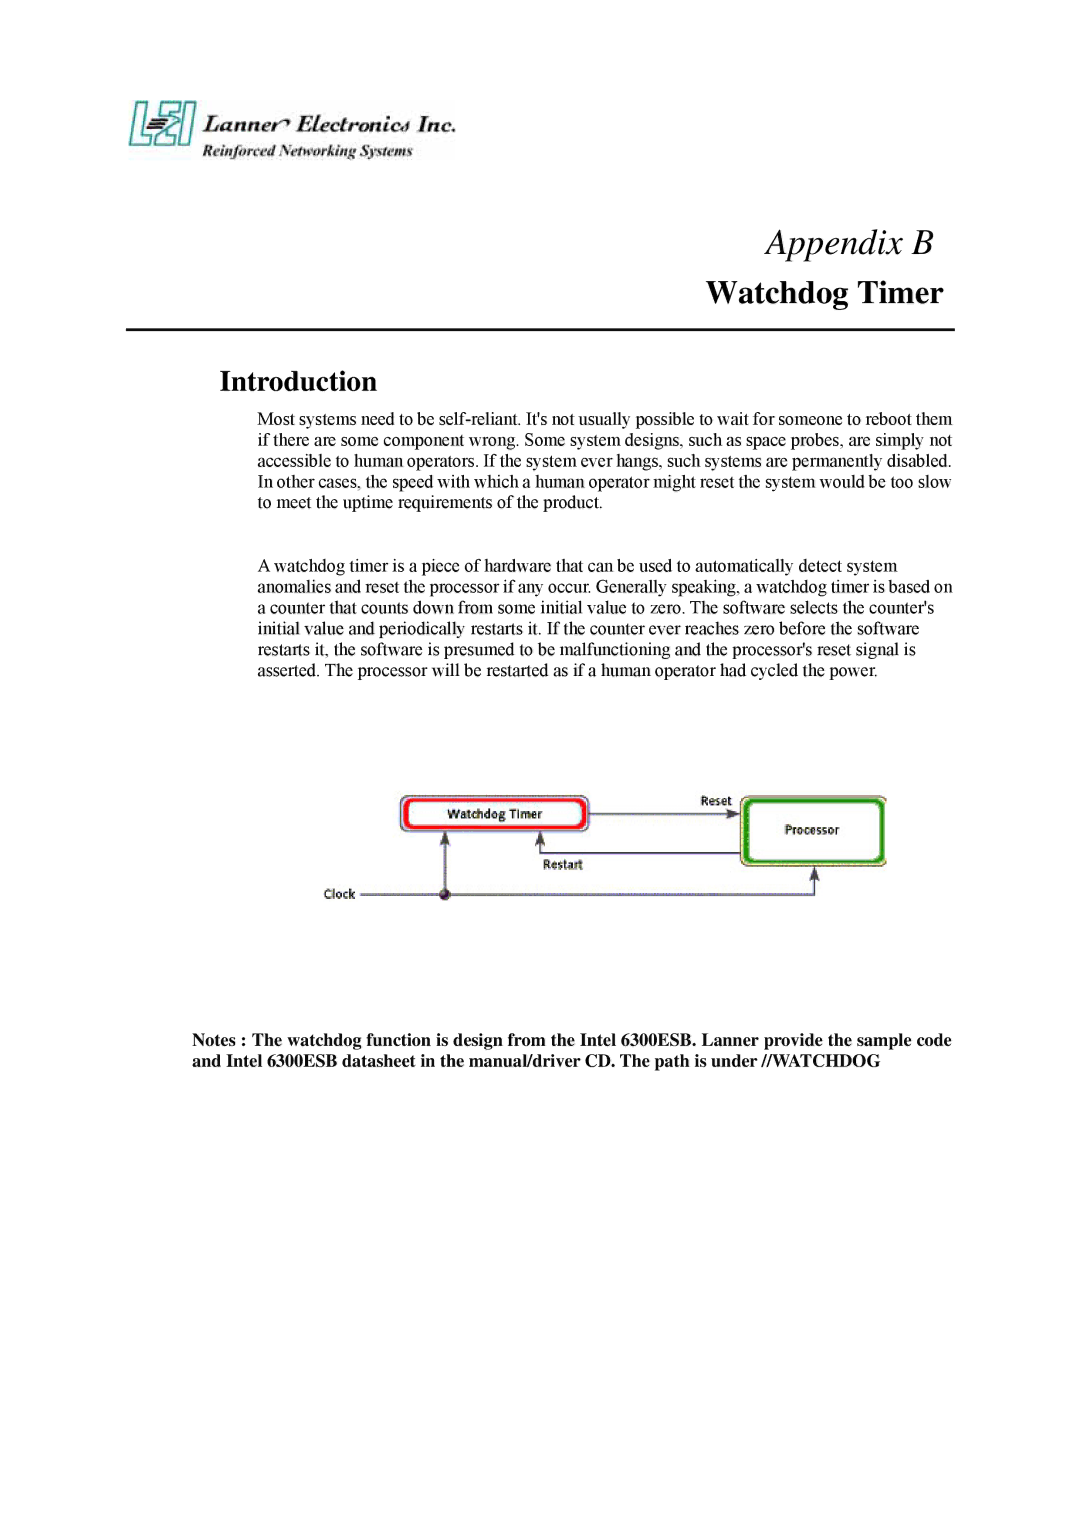 Lanner electronic FW-7890 user manual Appendix B, Watchdog Timer 